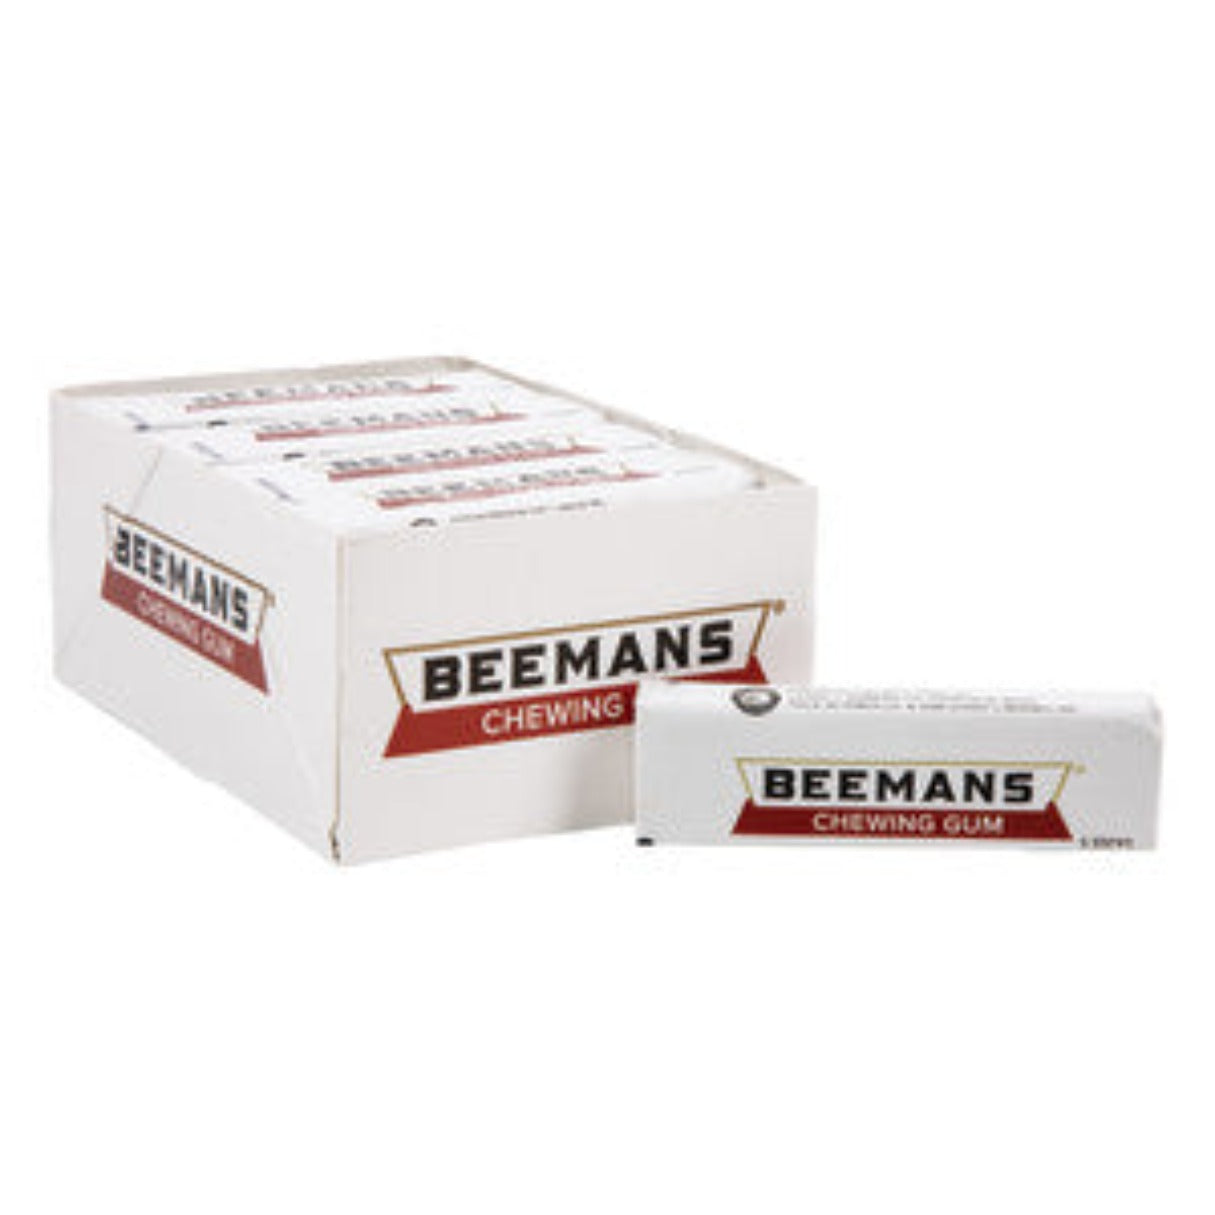 Beemans Gum Box 0.44oz - 20ct